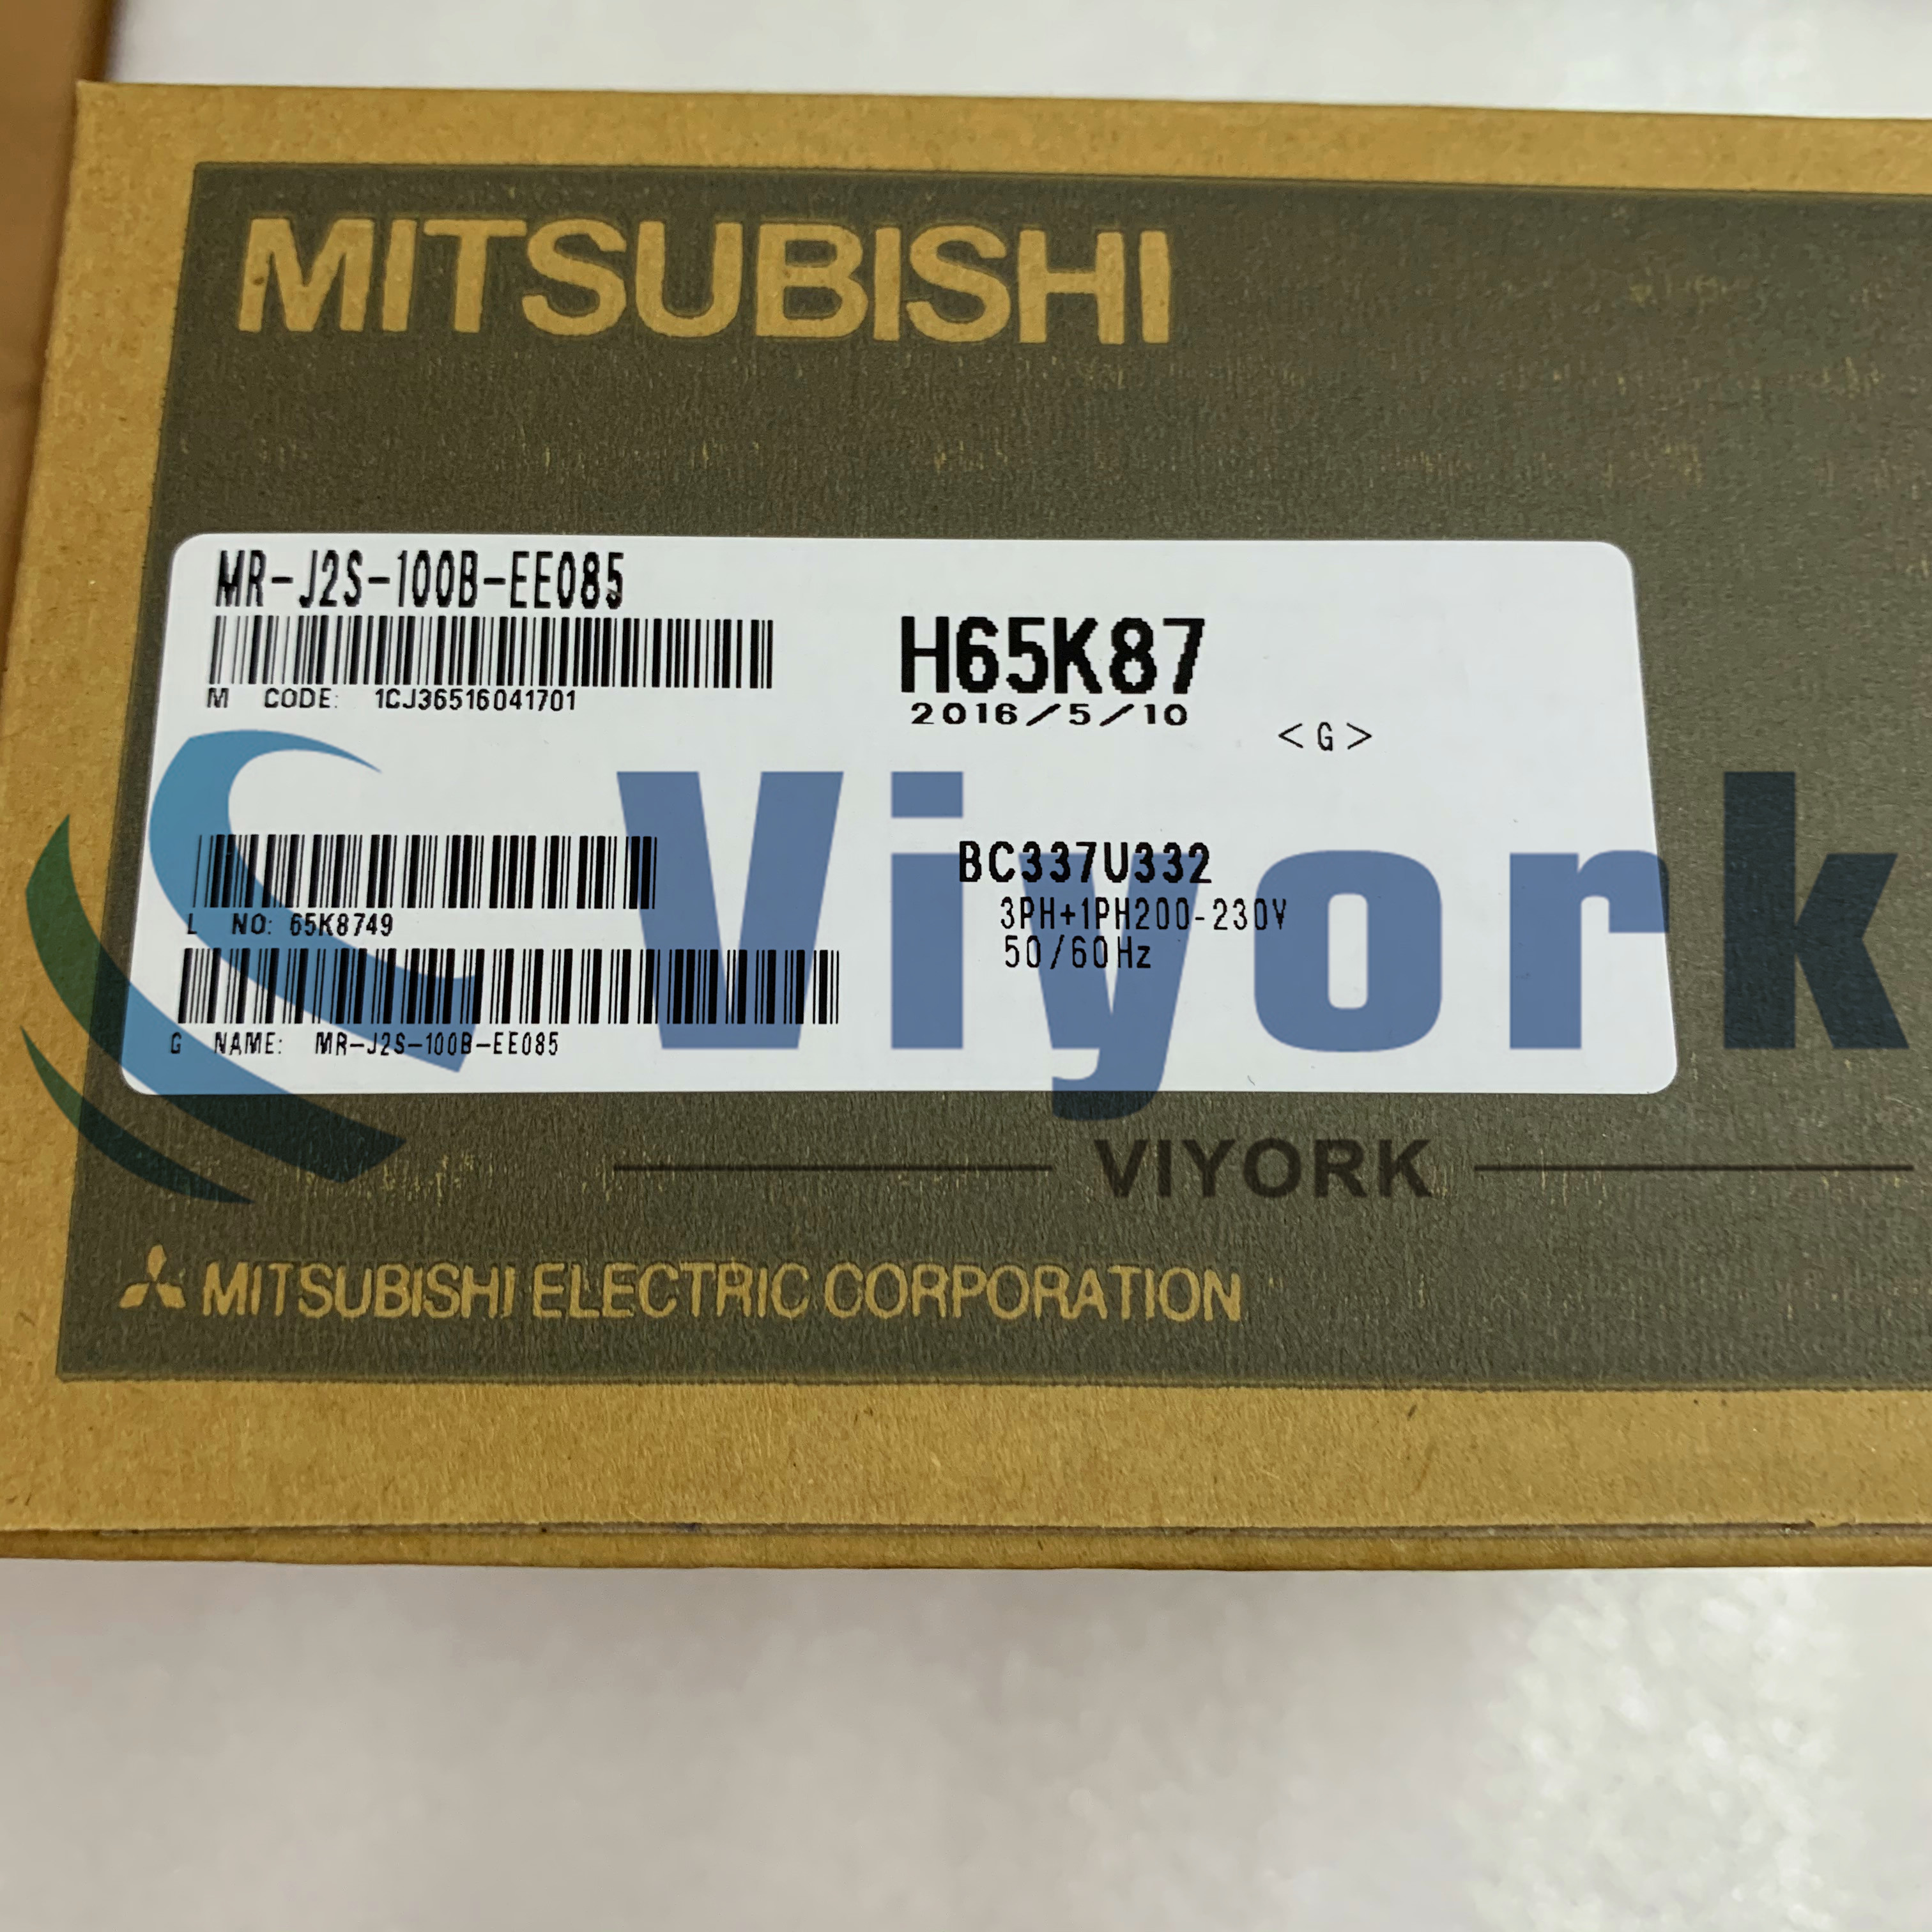 Mitsubishi MR-J2S-100B-EE085 SERVO DRIVE 1KW 5AMP 200-230V 50/60HZ NEW